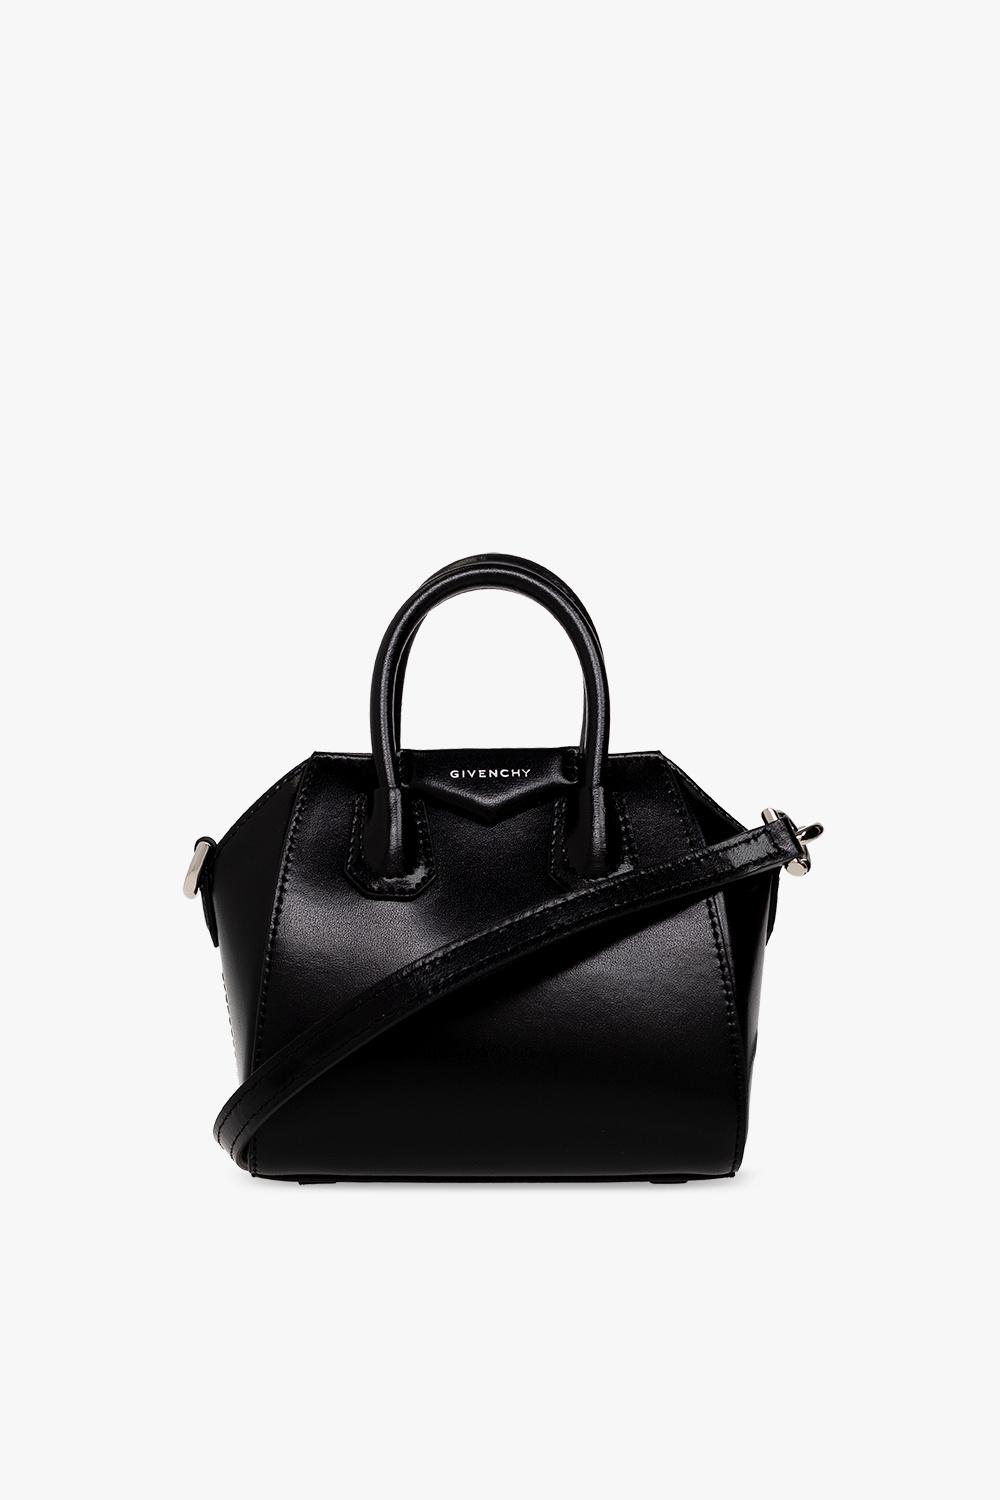 Givenchy 'antigona Micro' Shoulder Bag in Black | Lyst